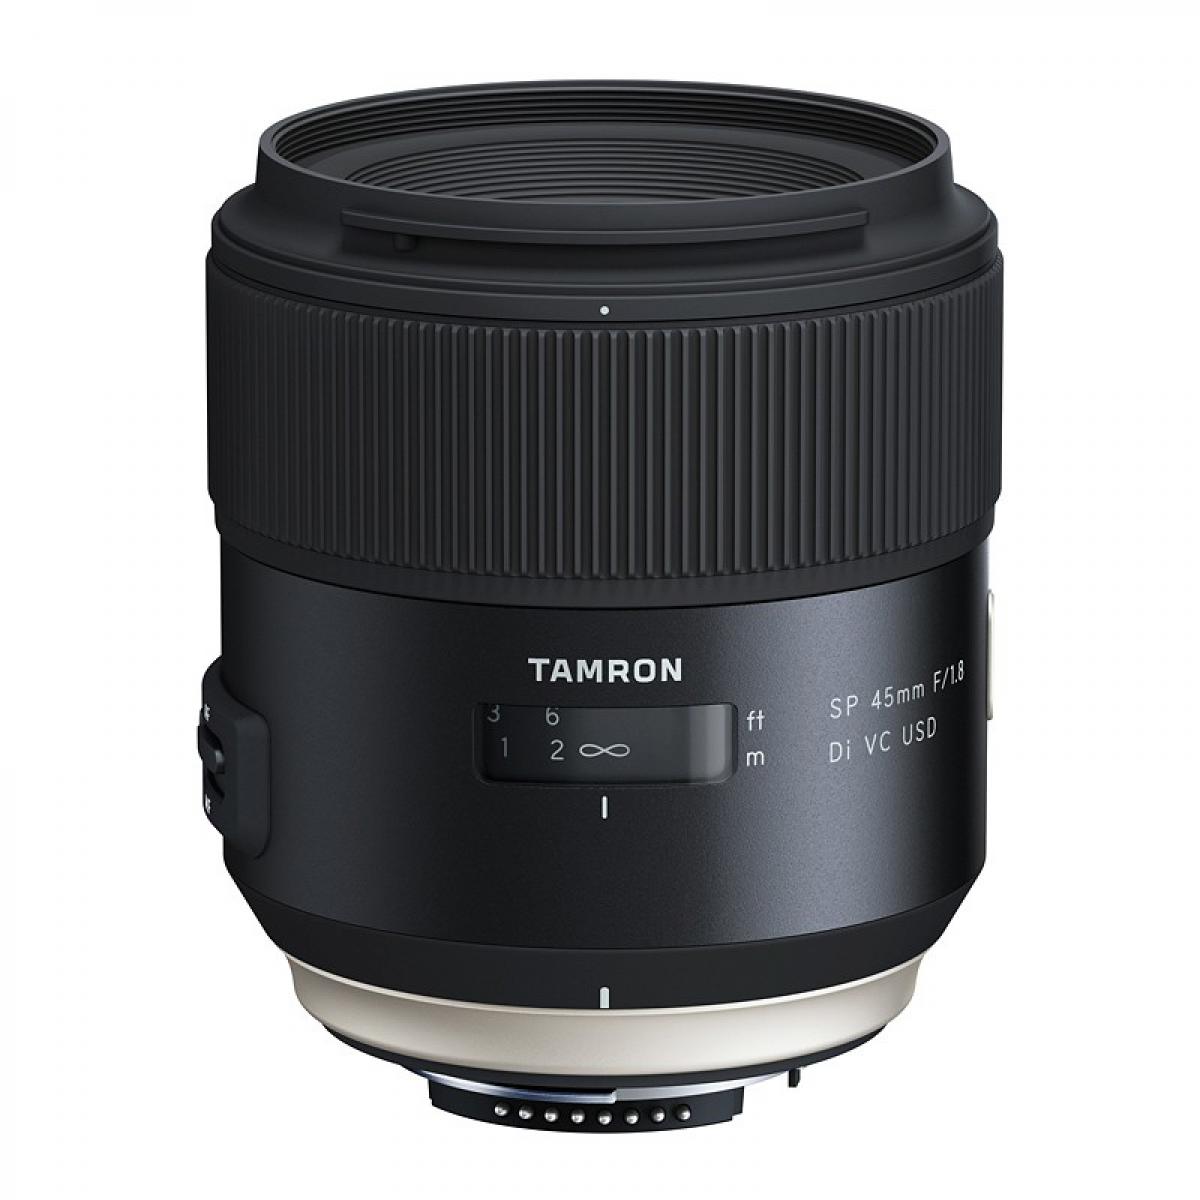 Tamron - TAMRON Objectif SP 45mm f/1.8 Di VC USD compatible avec Sony A Garanti 2 ans - Objectif Photo